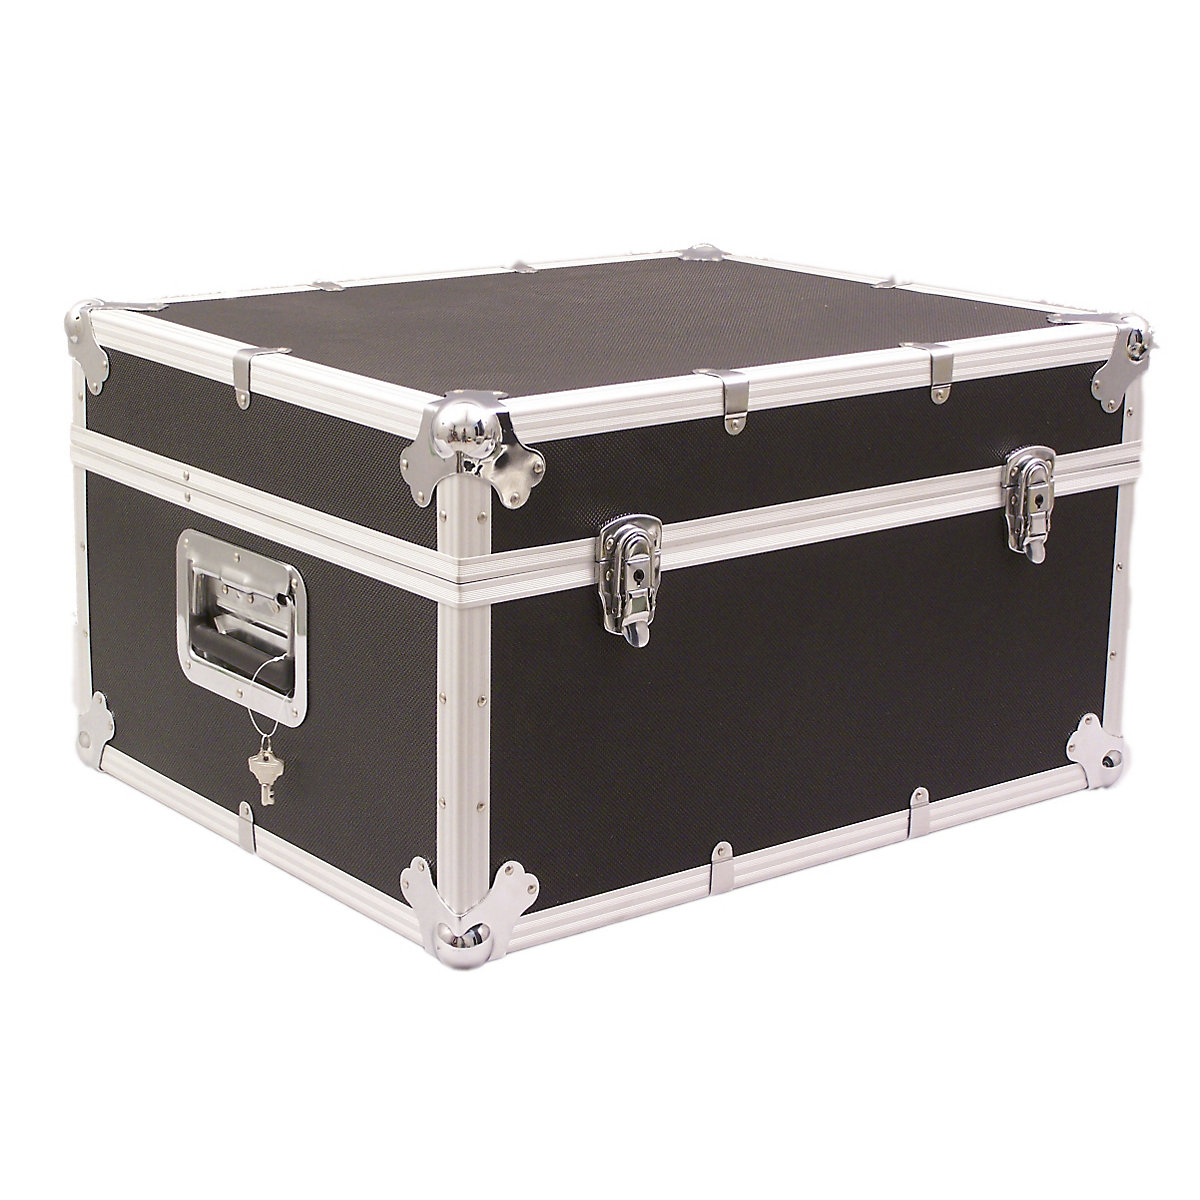 Transportbox, met bekleding – VISO, aluminium frame met multiplex wanden, uitwendige l x b x h = 600 x 500 x 360 mm-6